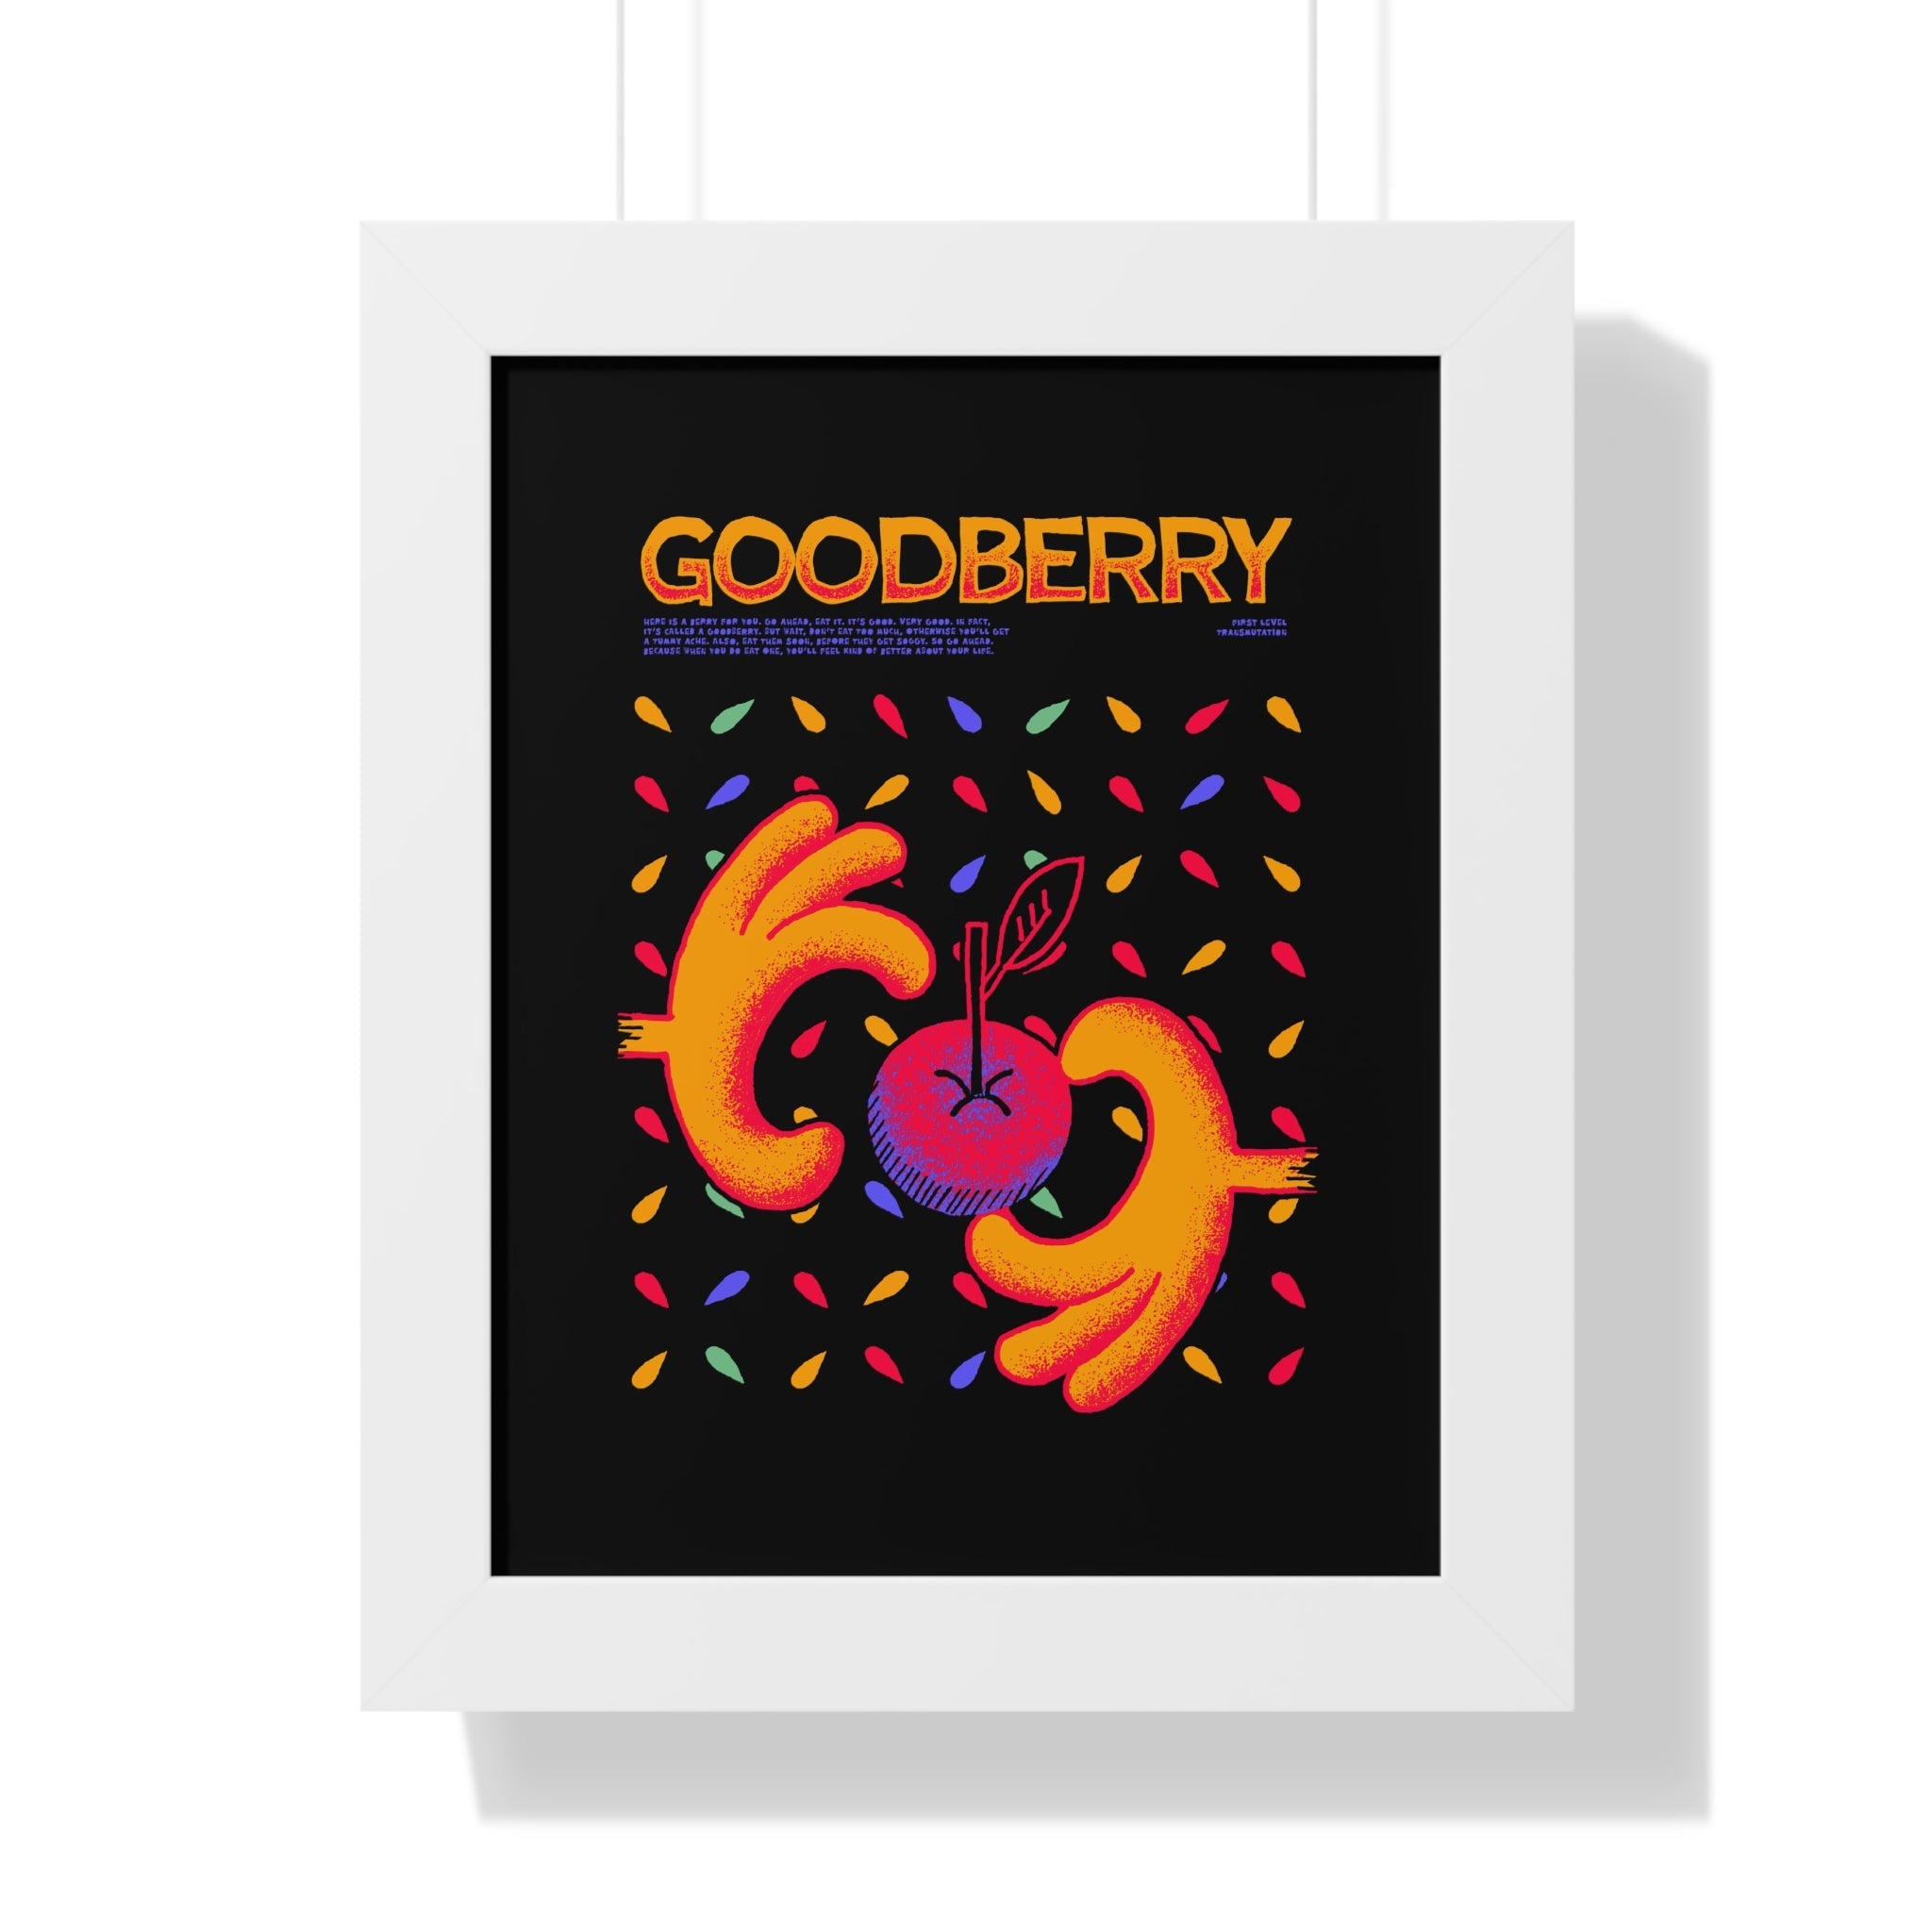 Goodberry | Framed Poster - Framed Poster - Ace of Gnomes - 22468251265390591552